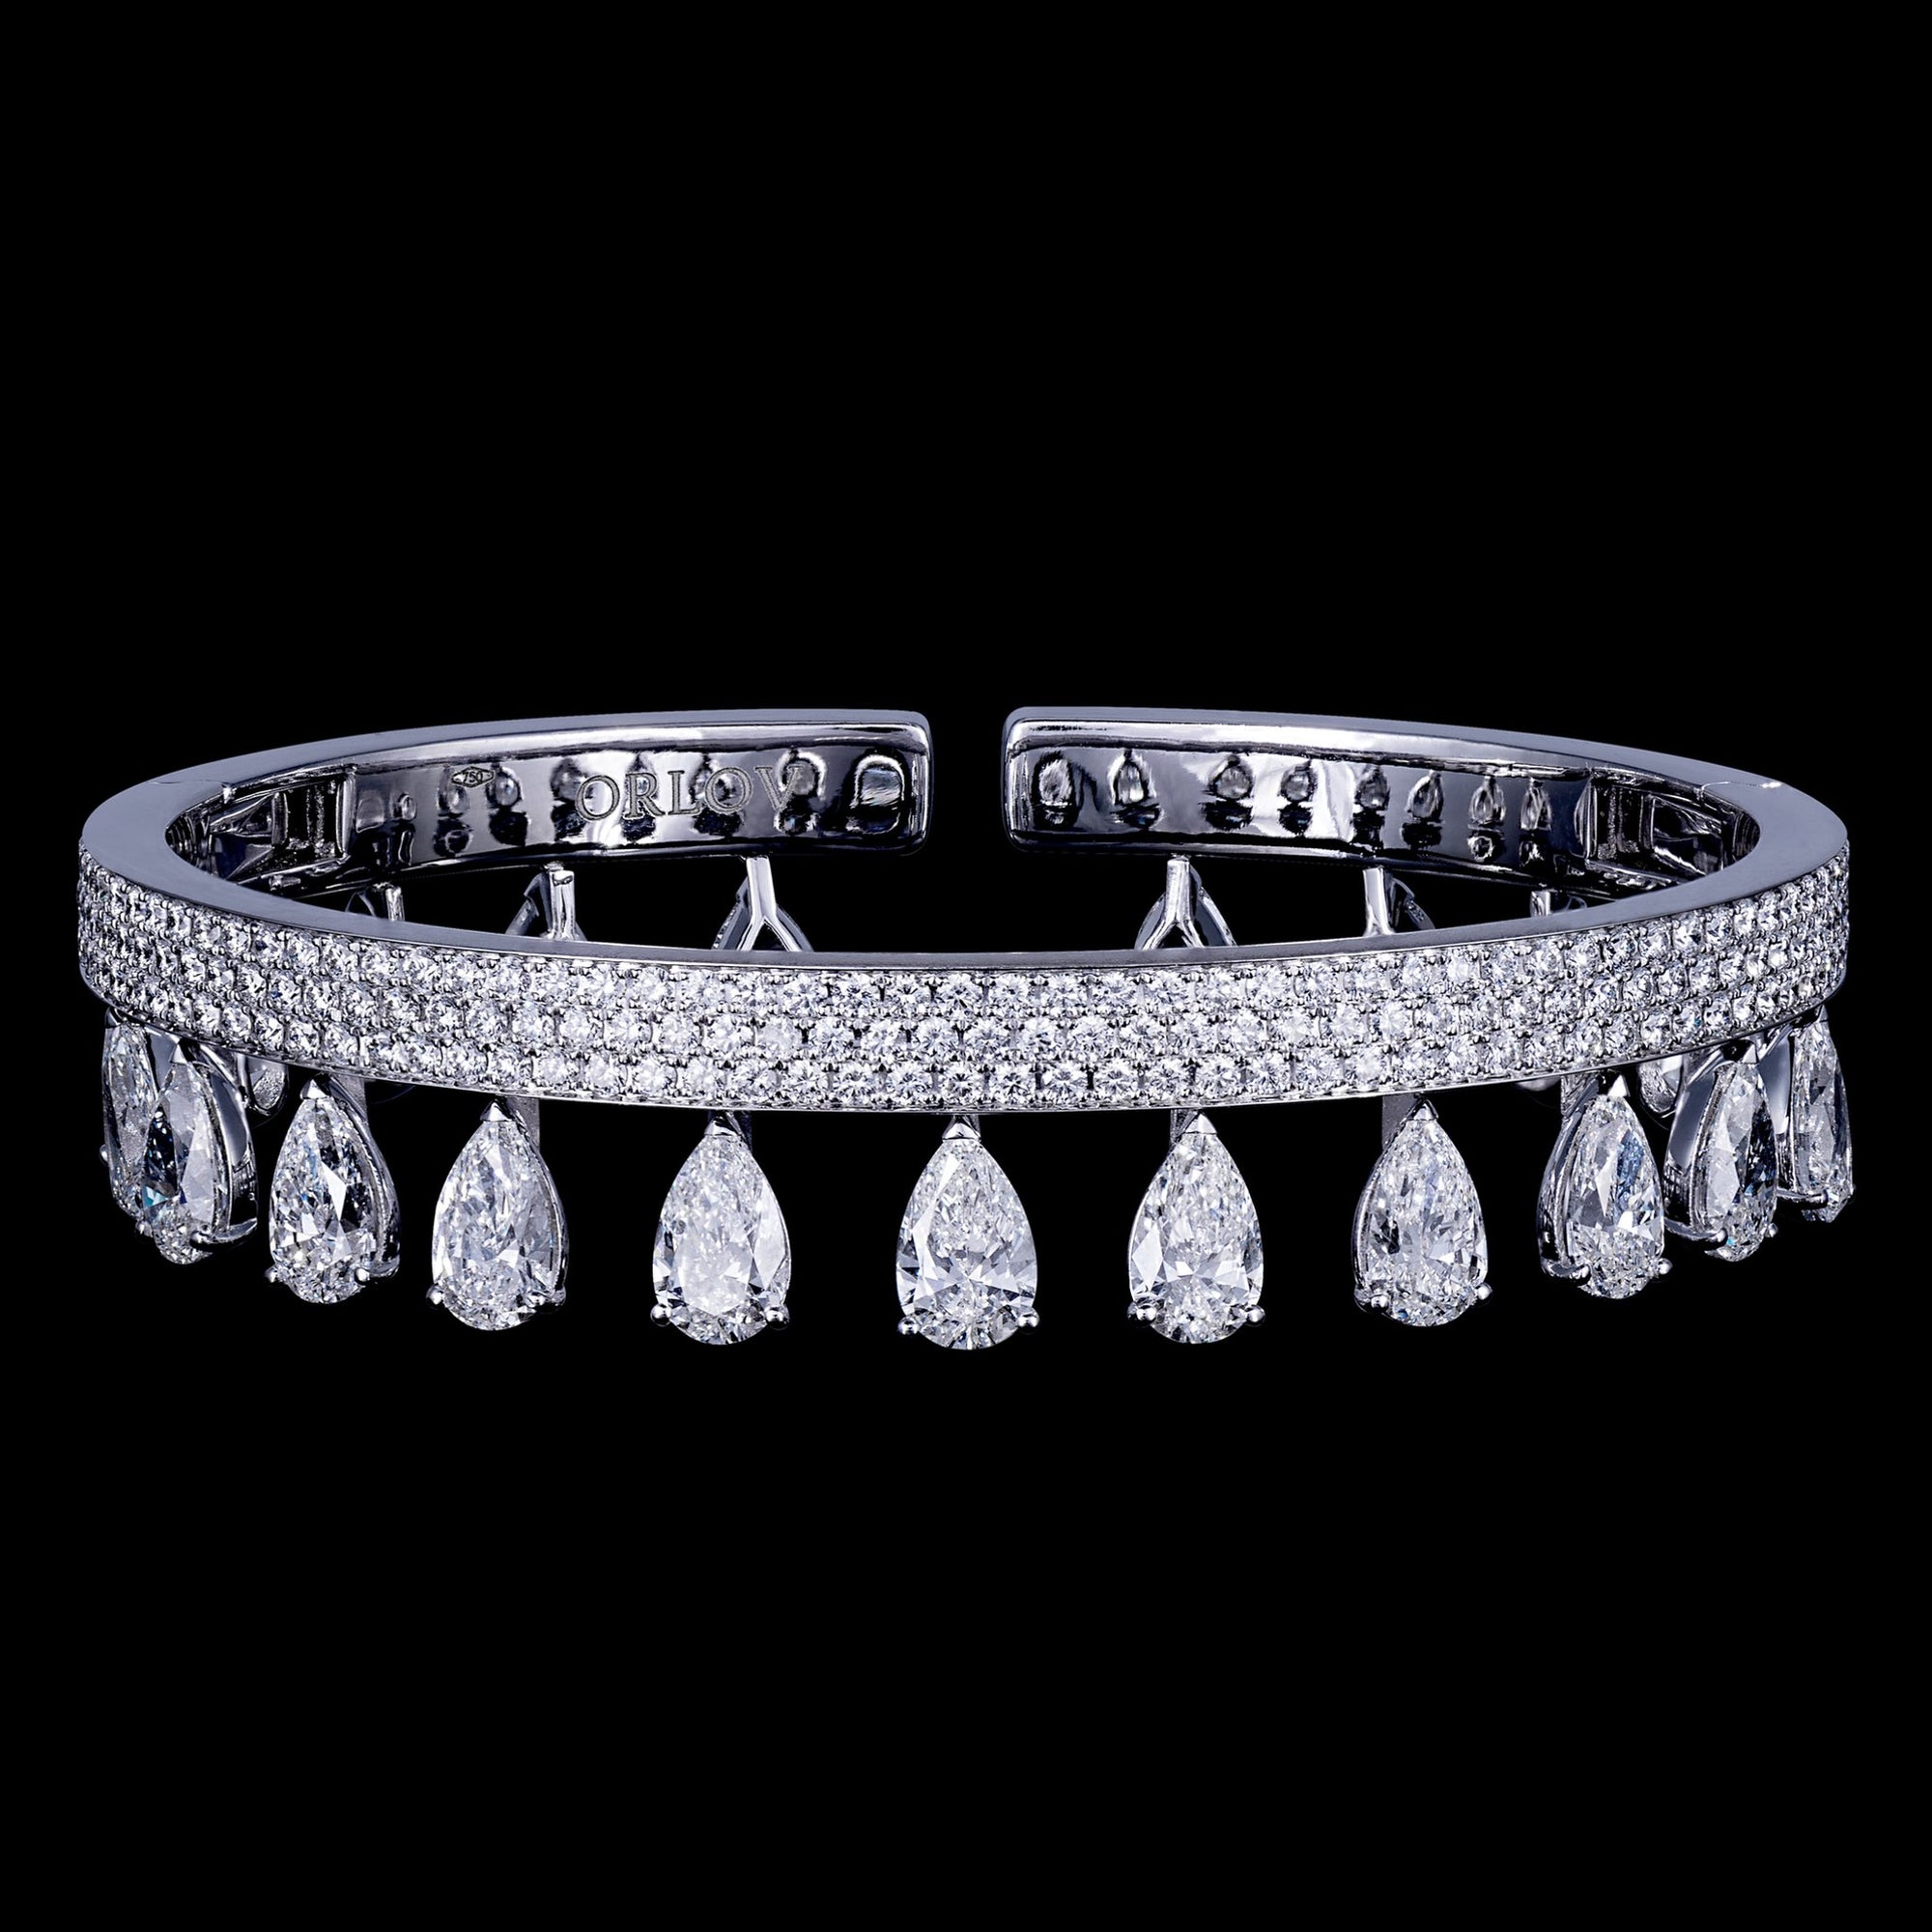 ORLOV SIMPLICITY bracelet set with diamonds